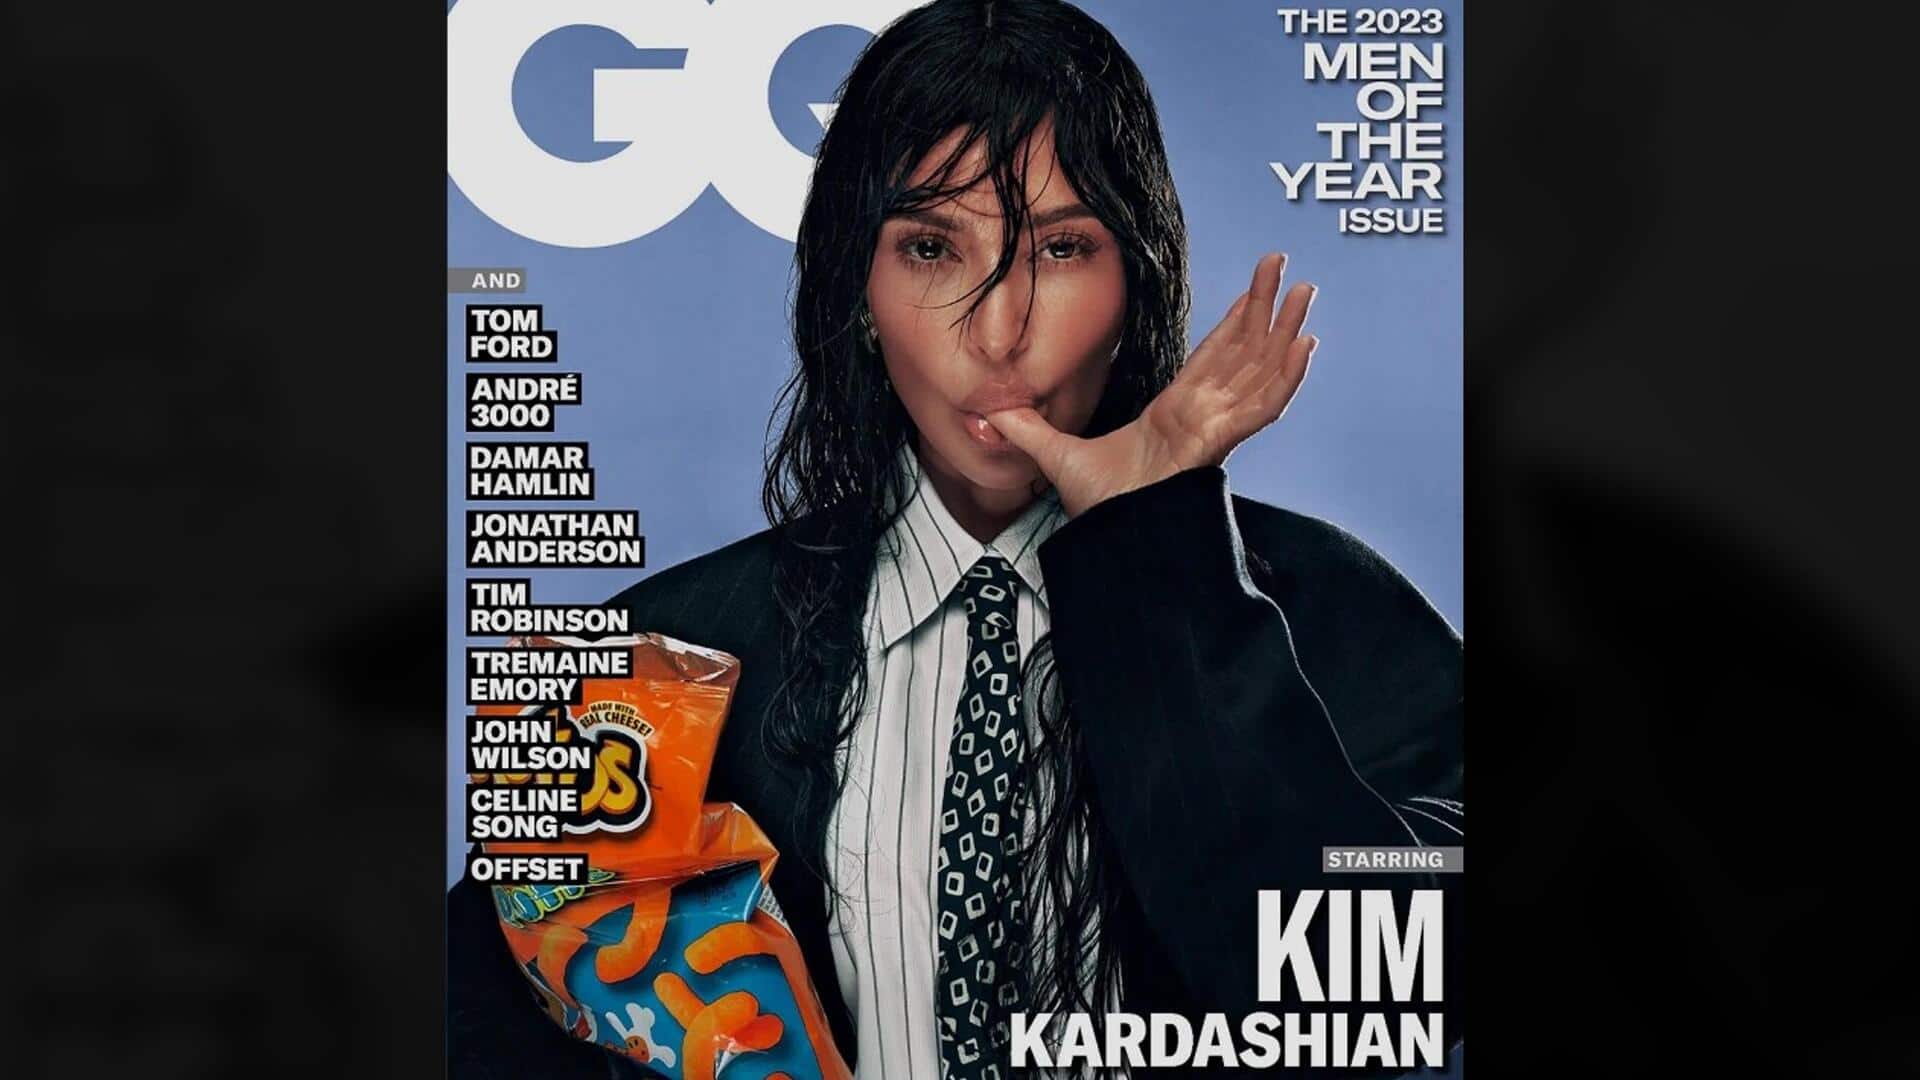 How did Kim Kardashian become 'GQ's Man of the Year